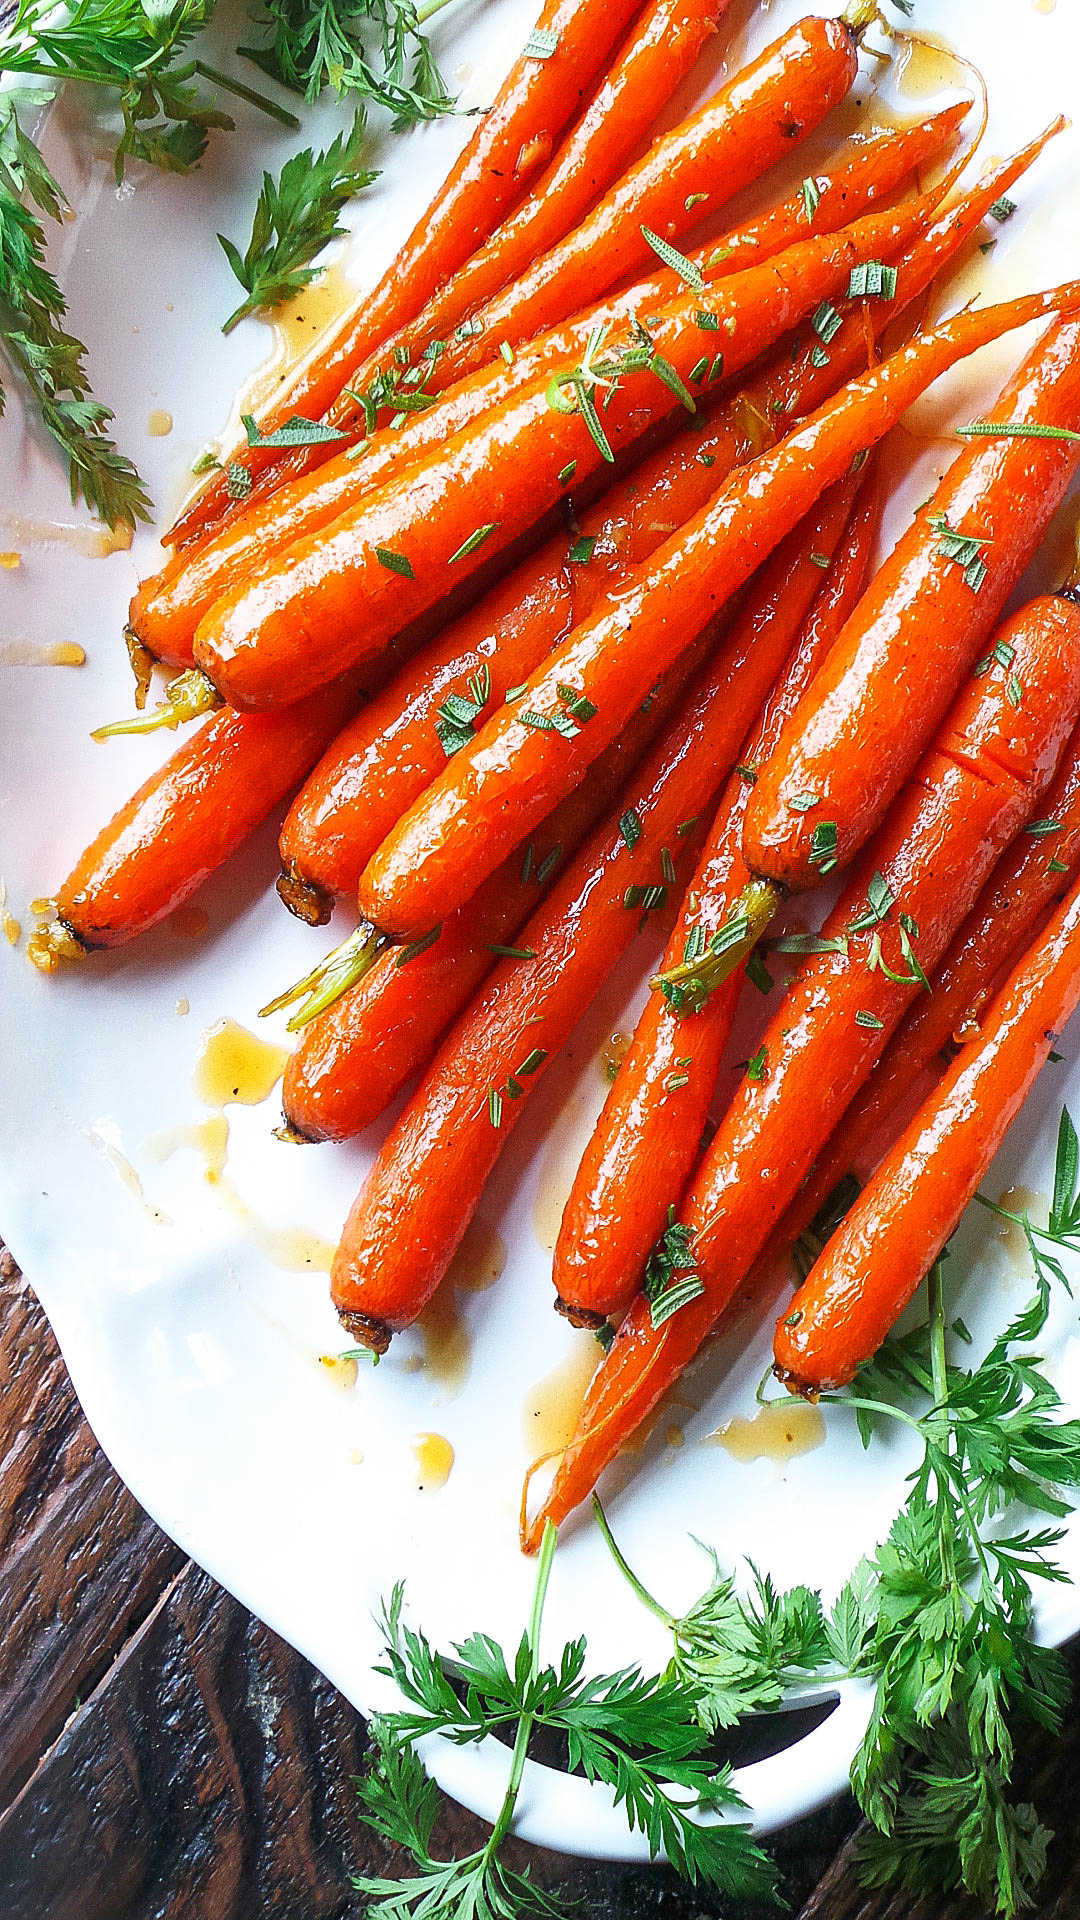 Ginger and Orange Marmalade Glazed Carrots